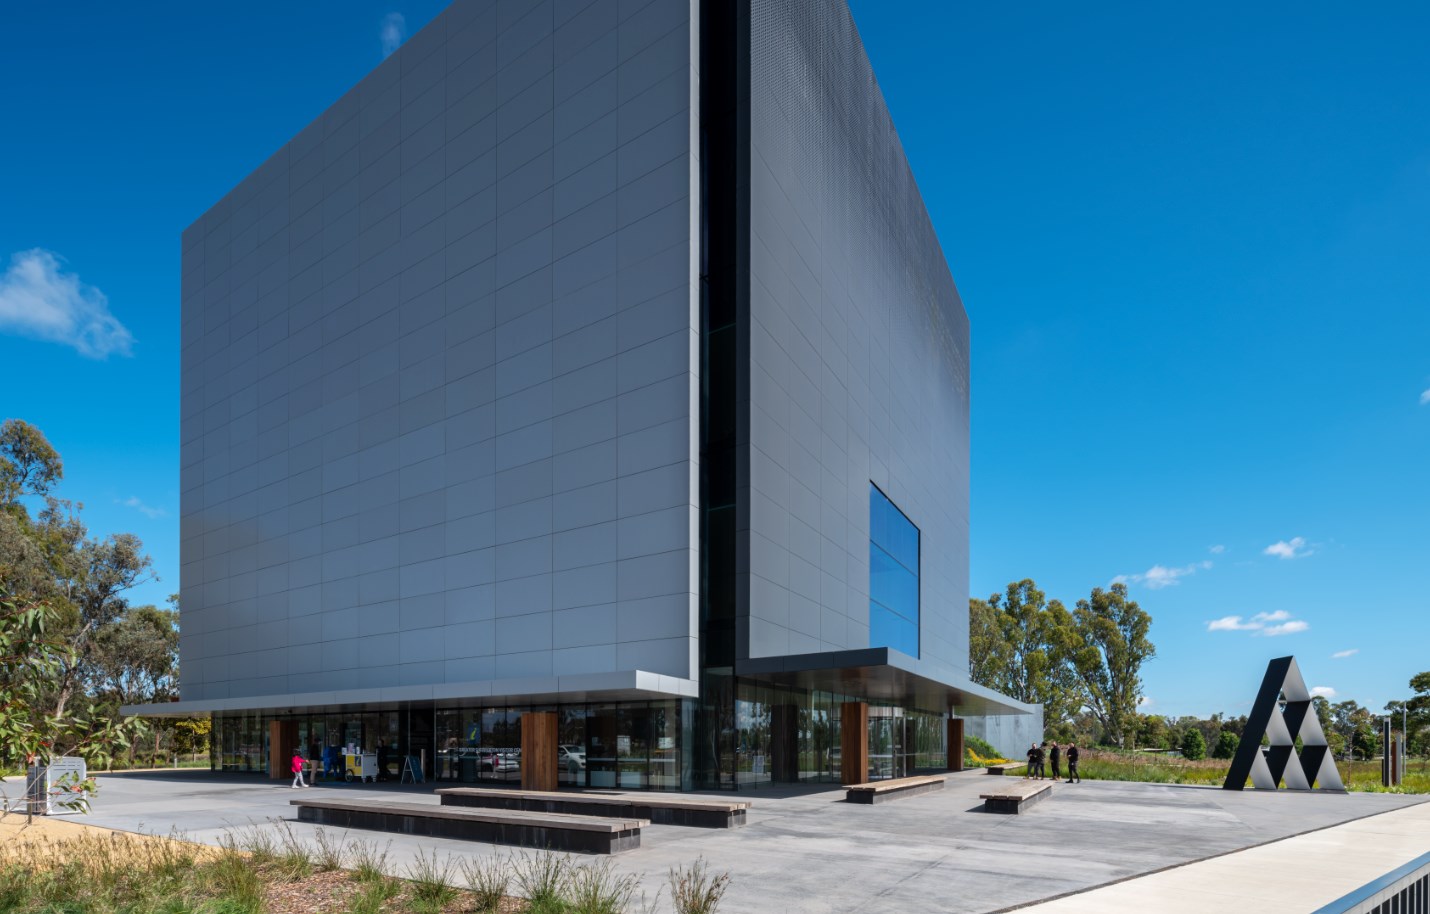 Shepparton’s new $50M Art Museum designed by Denton Corker Marshall